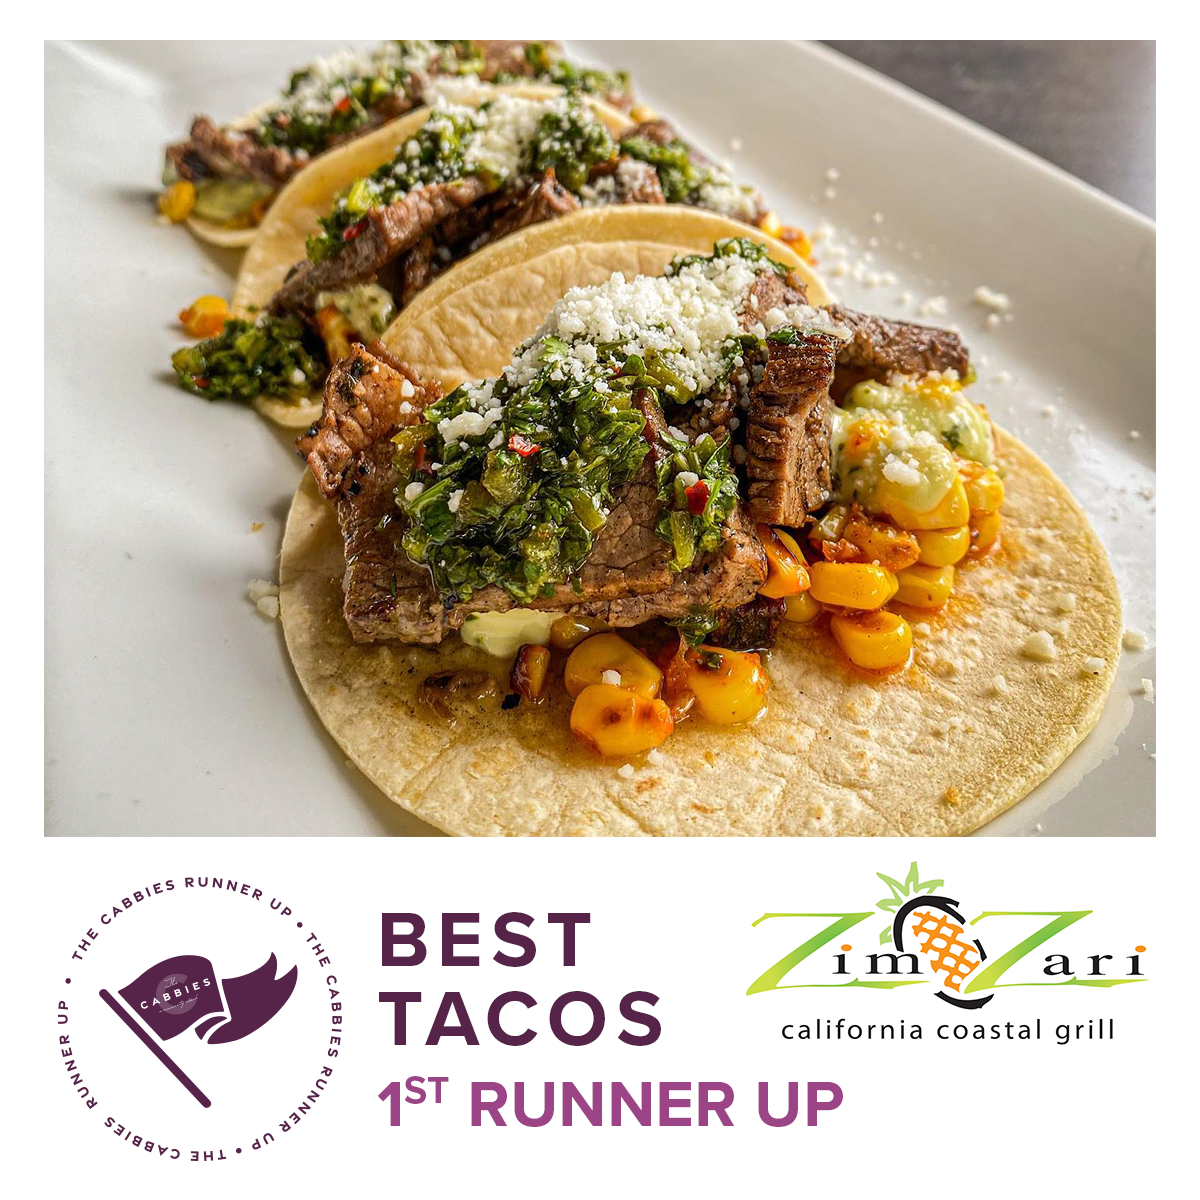 best tacos 1st runner up - Zim Zari